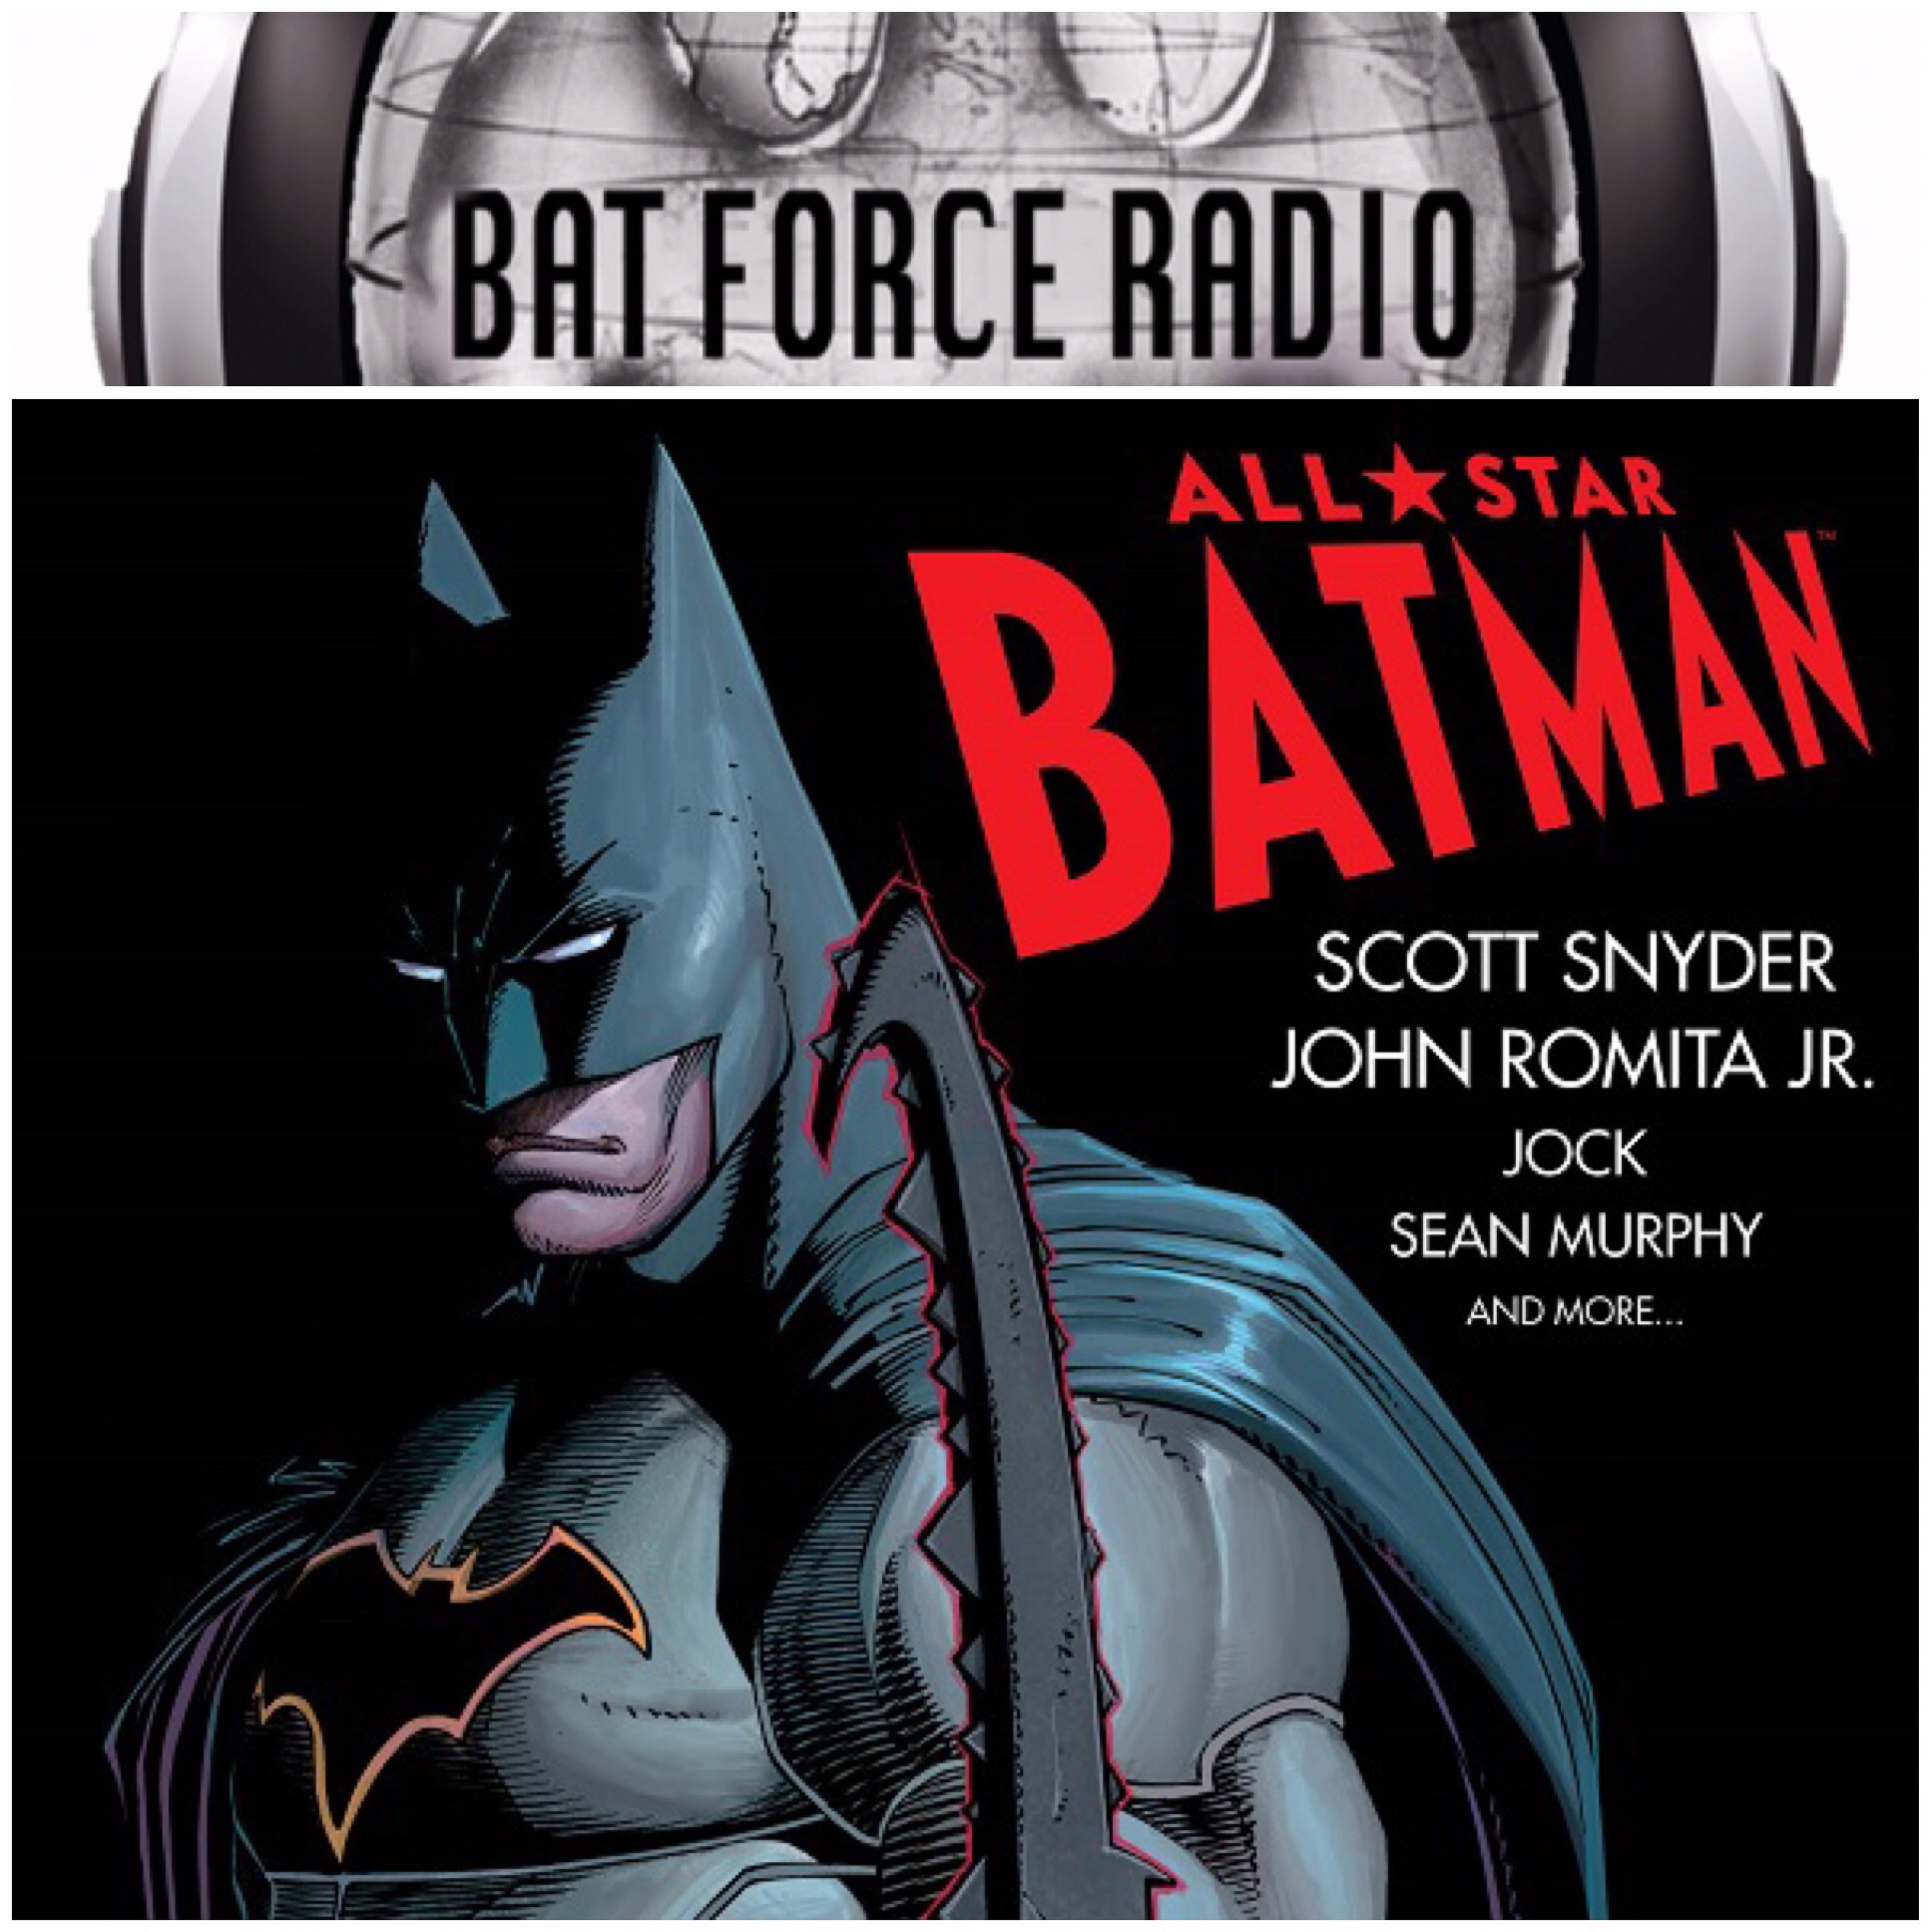 BatForceRadioEp047: All Star Batman # 1 !